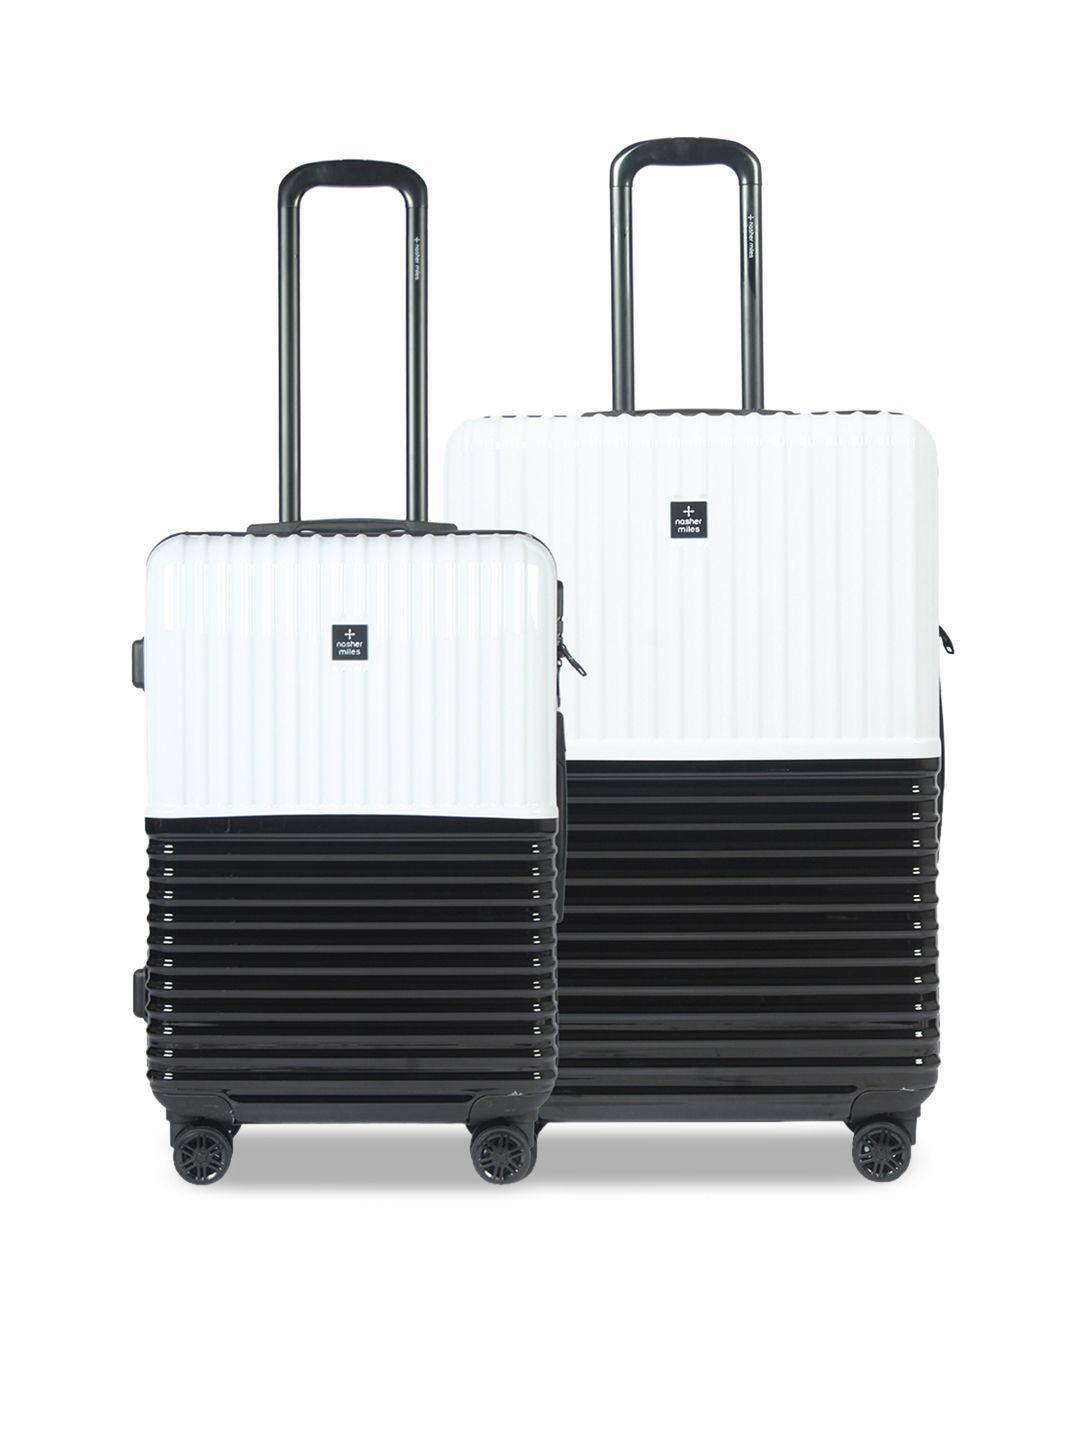 nasher miles istanbul set of 2 white & black colourblocked istanbul hard-sided trolley suitcases